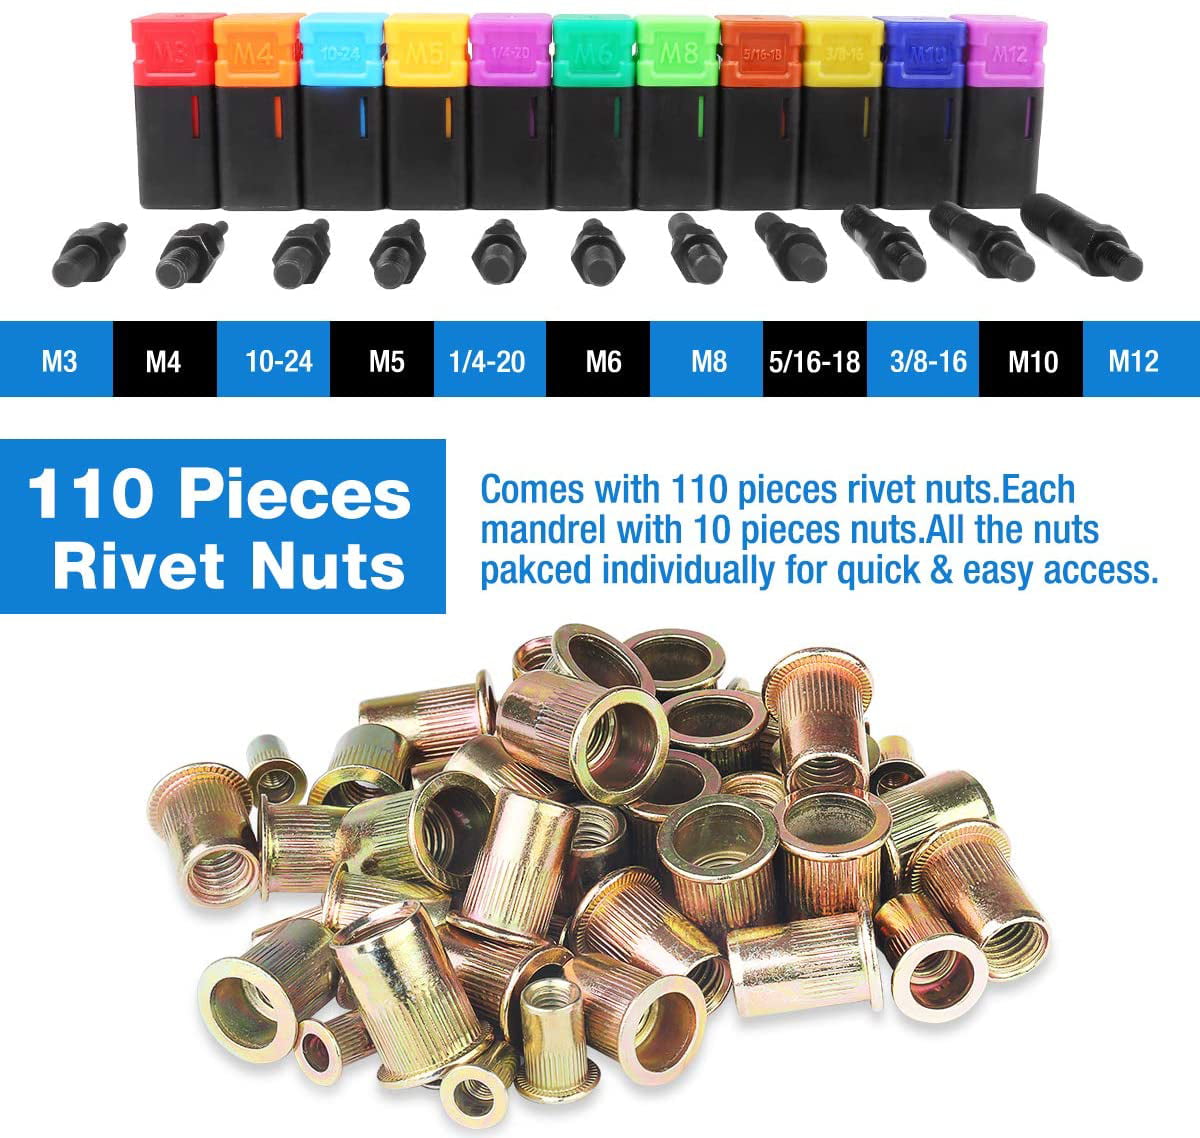 Patend 16 Inch Hand Rivet Nut Tool Professional Rivet Nut Setter Kit with 11PCS Metric & Inch Mandrels,110PCS Rivet Nuts 